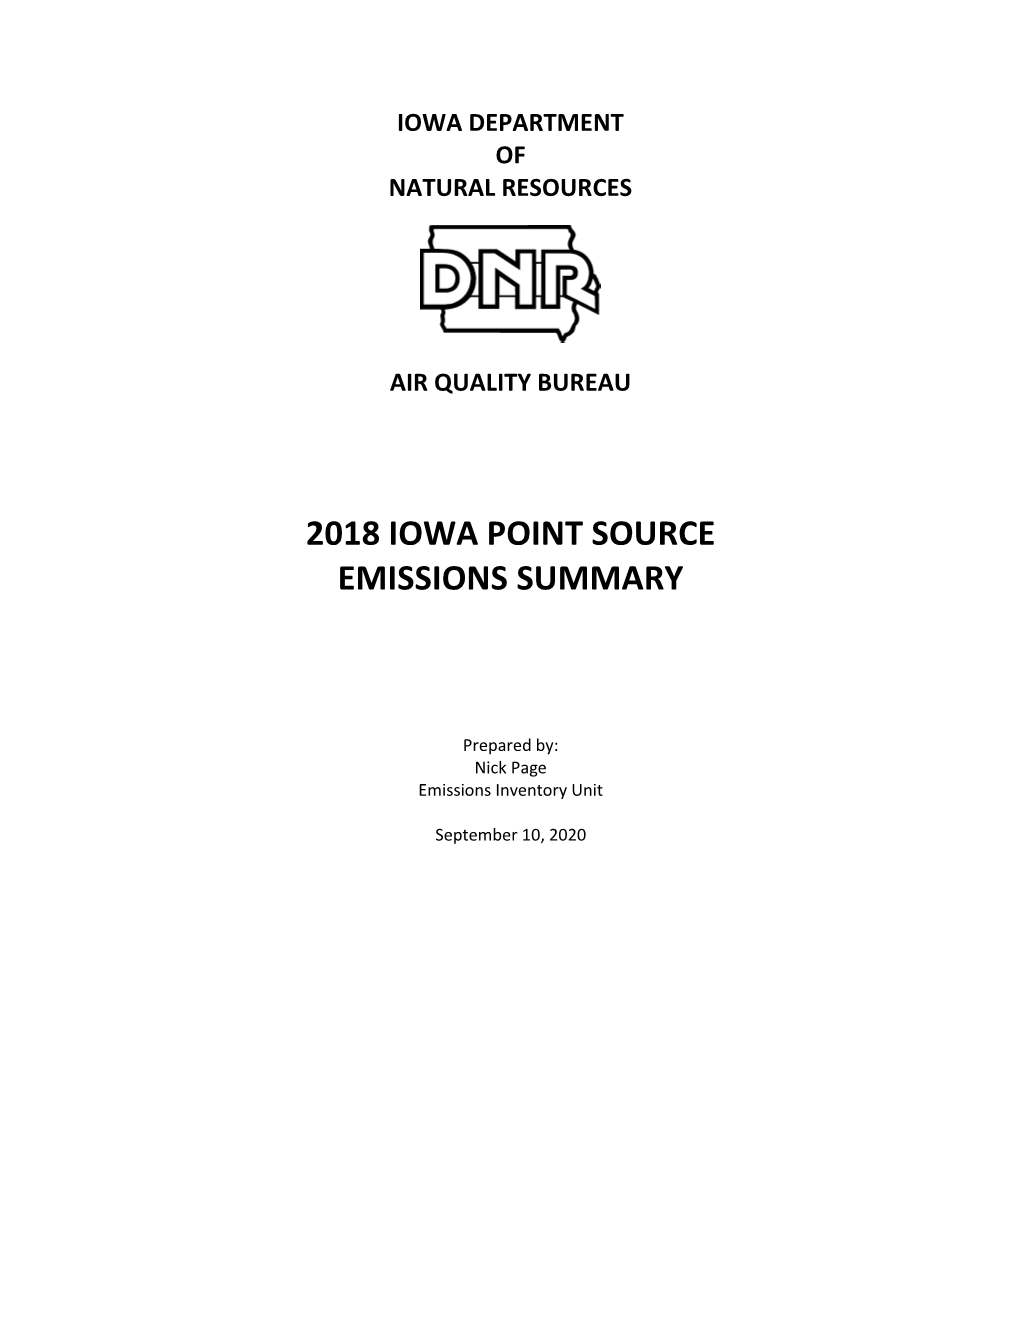 2018 Iowa Point Source Emissions Summary